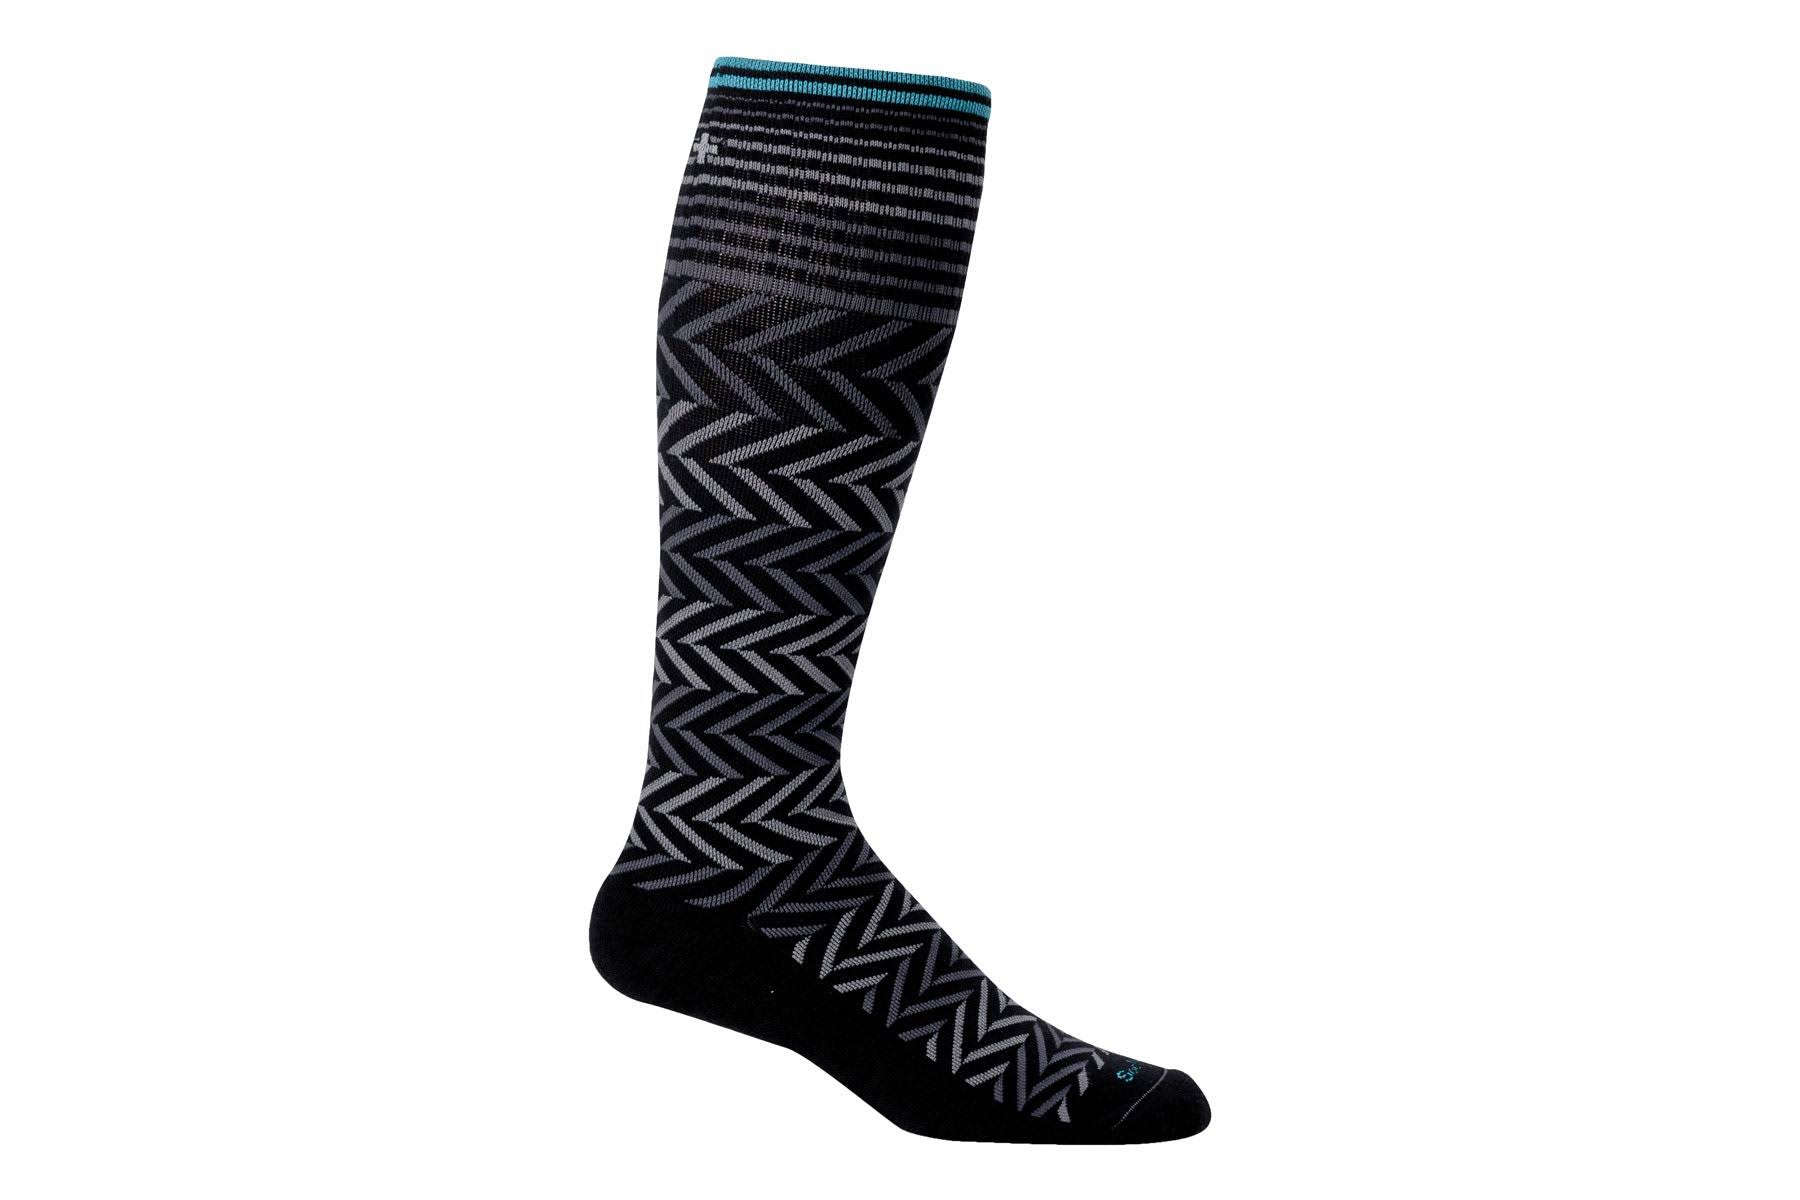 Sockwell Women's Pulse Firm Compression Socks, Black, Small